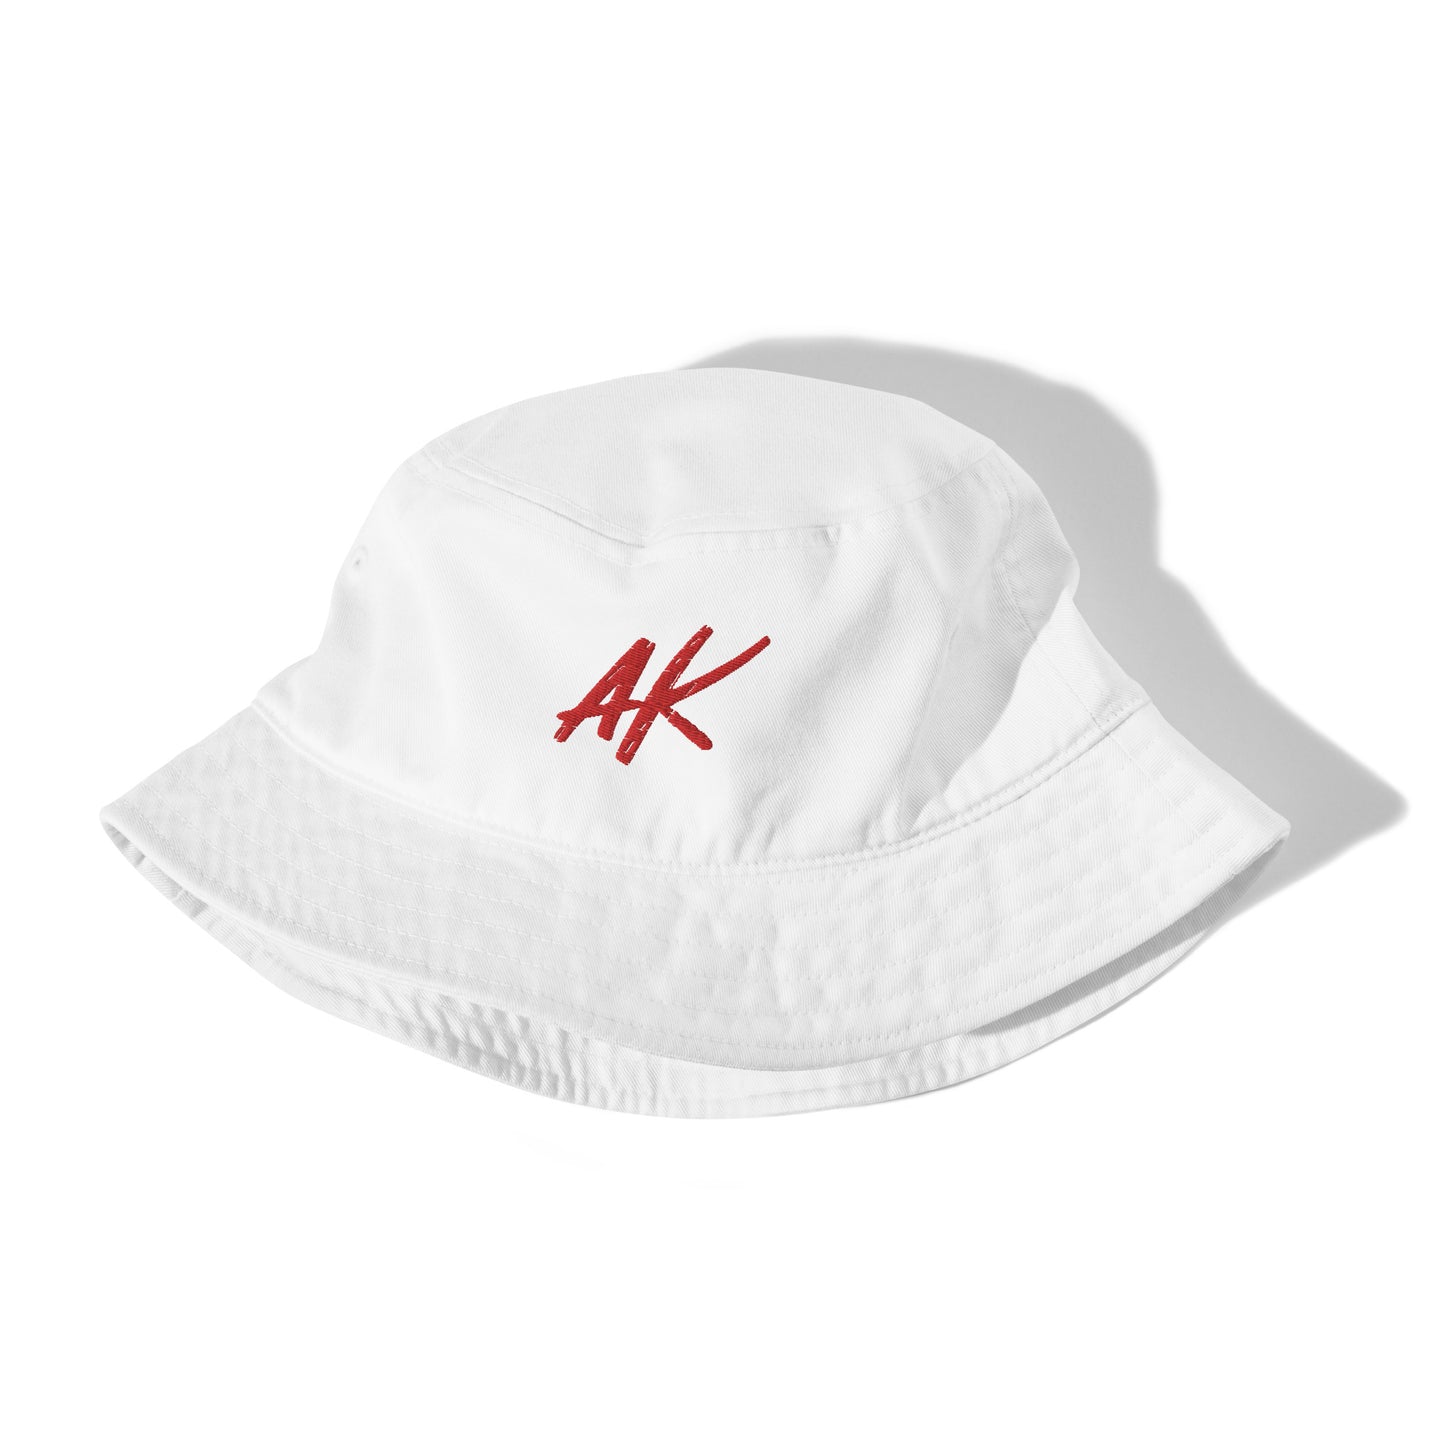 AK bucket hat (red)